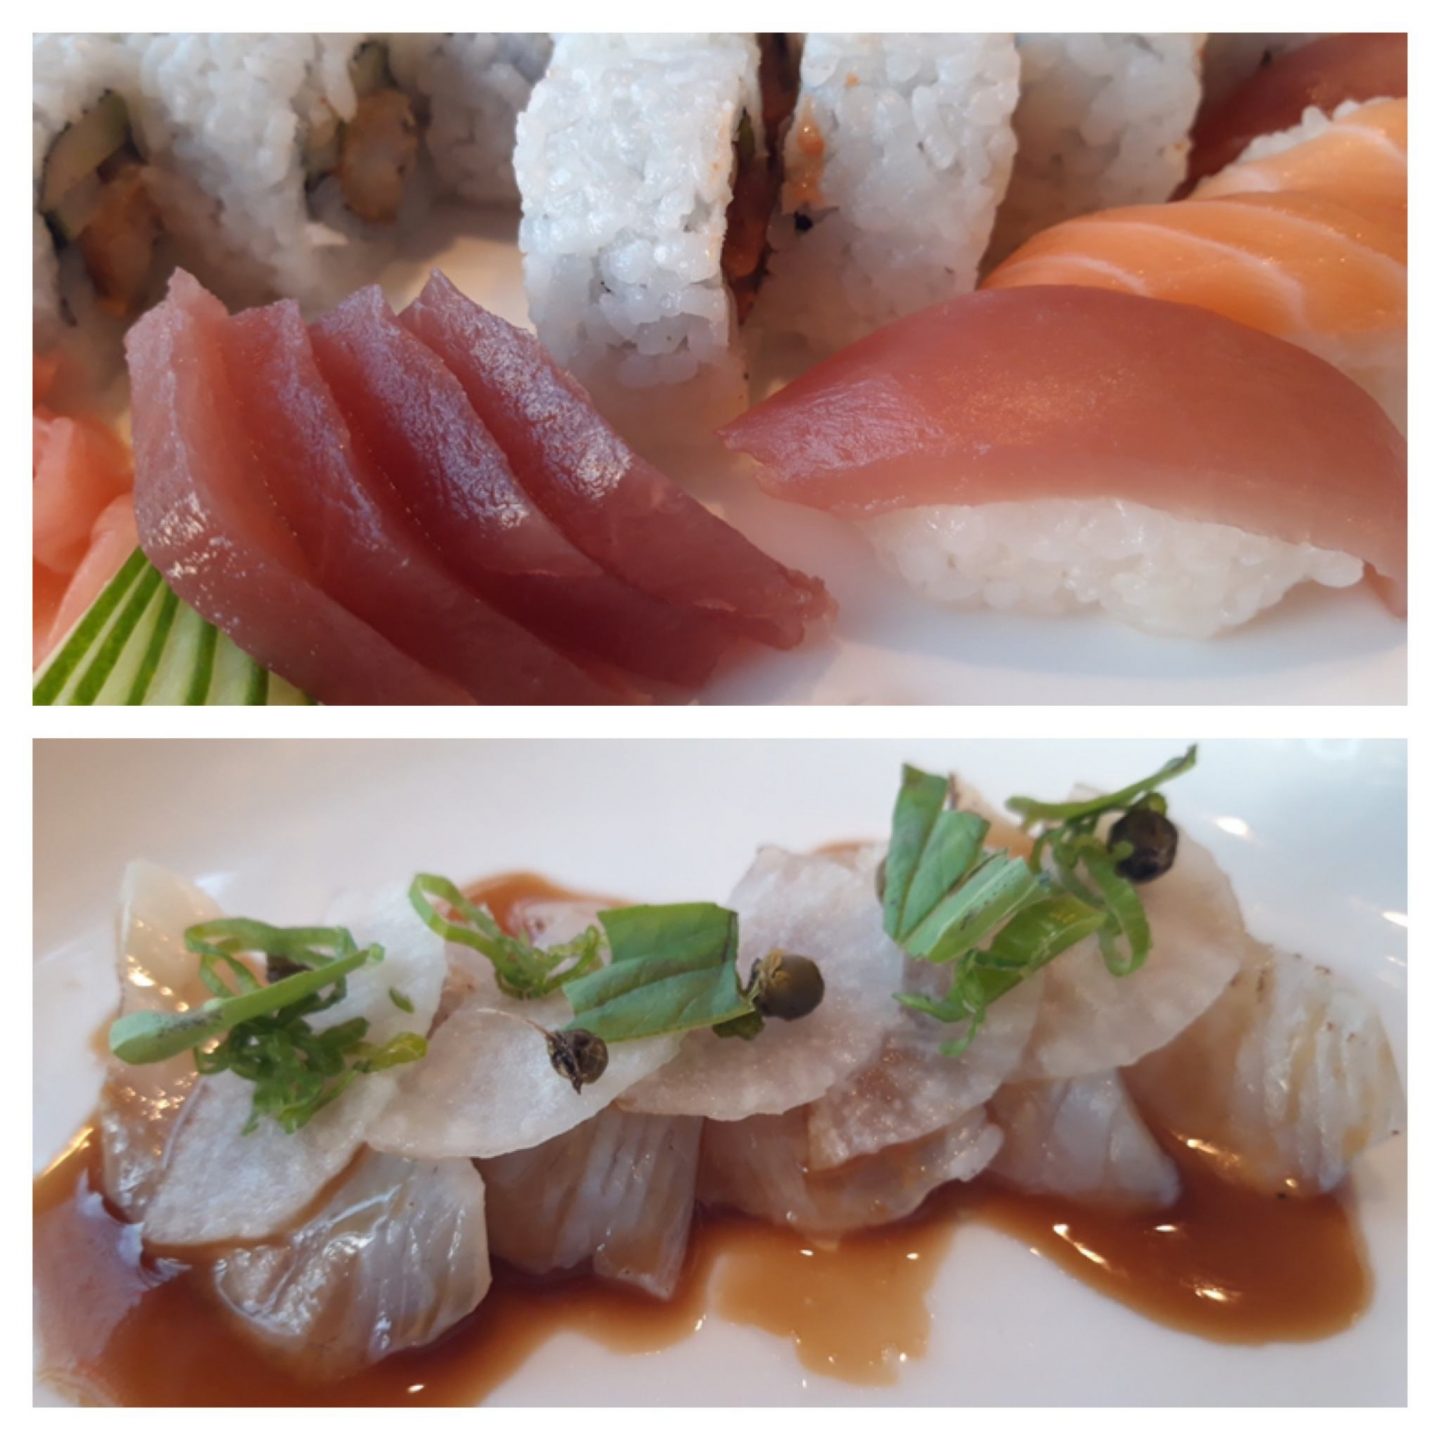 Erfahrung Bewertung Kritik Sushi Sashimi Hanami Tim Raue Mein Schiff 6 Foodblog Sternestulle